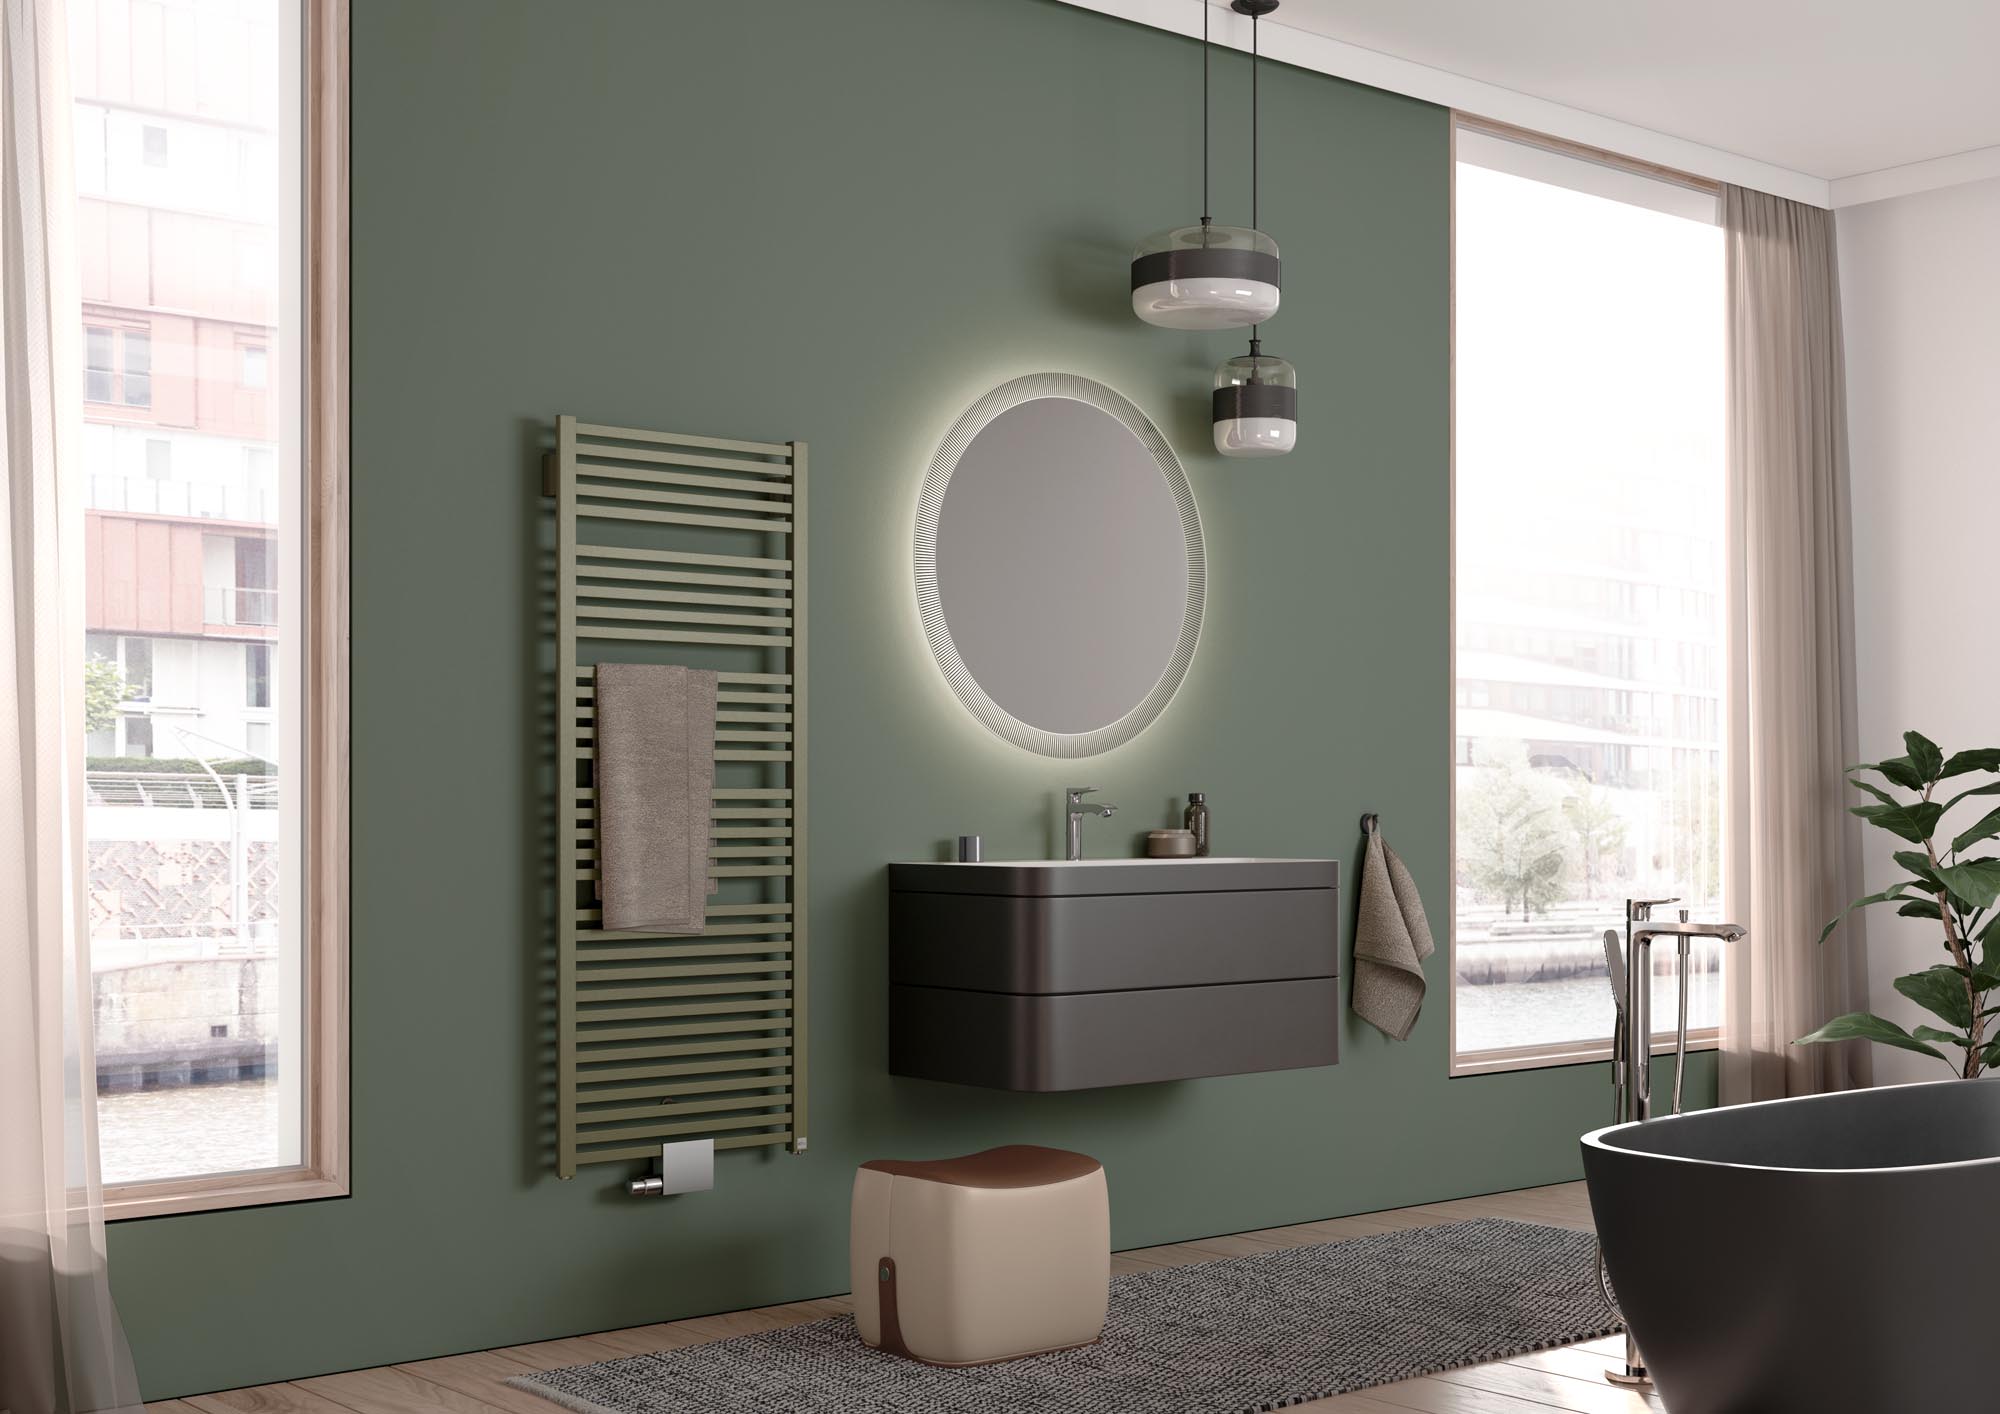 Kermi Geneo quadris design and bathroom radiators – unusually shaped elements, attractive appearance.